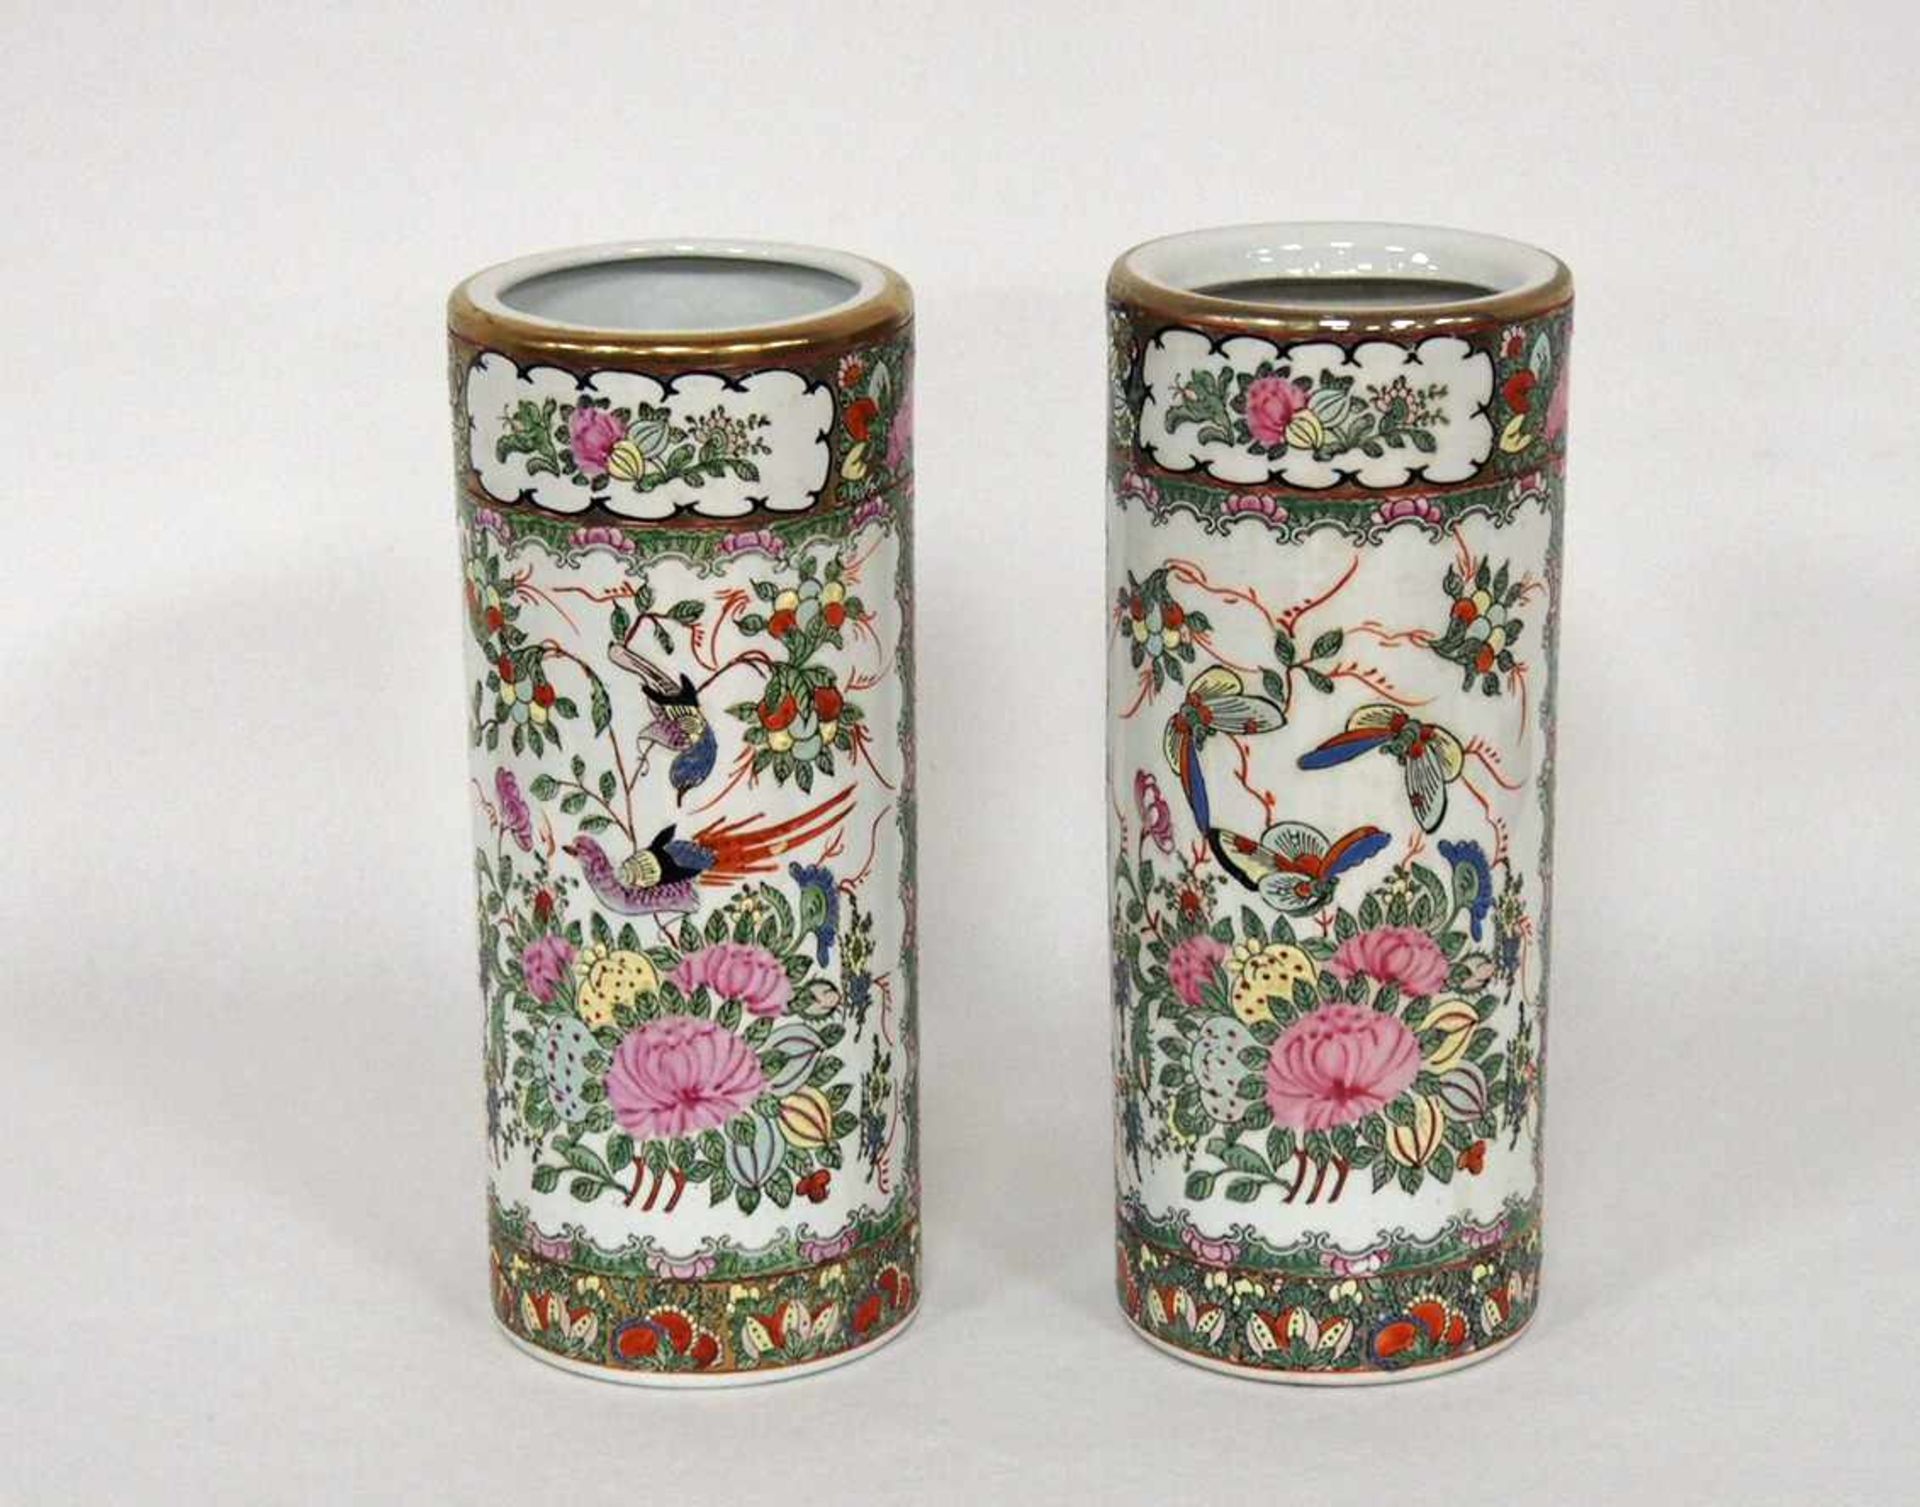 Paar Vasen, China 20. Jh.Porzellan, Blumen- und Insektenmalerei, Vergoldung, Höhe 31 cm